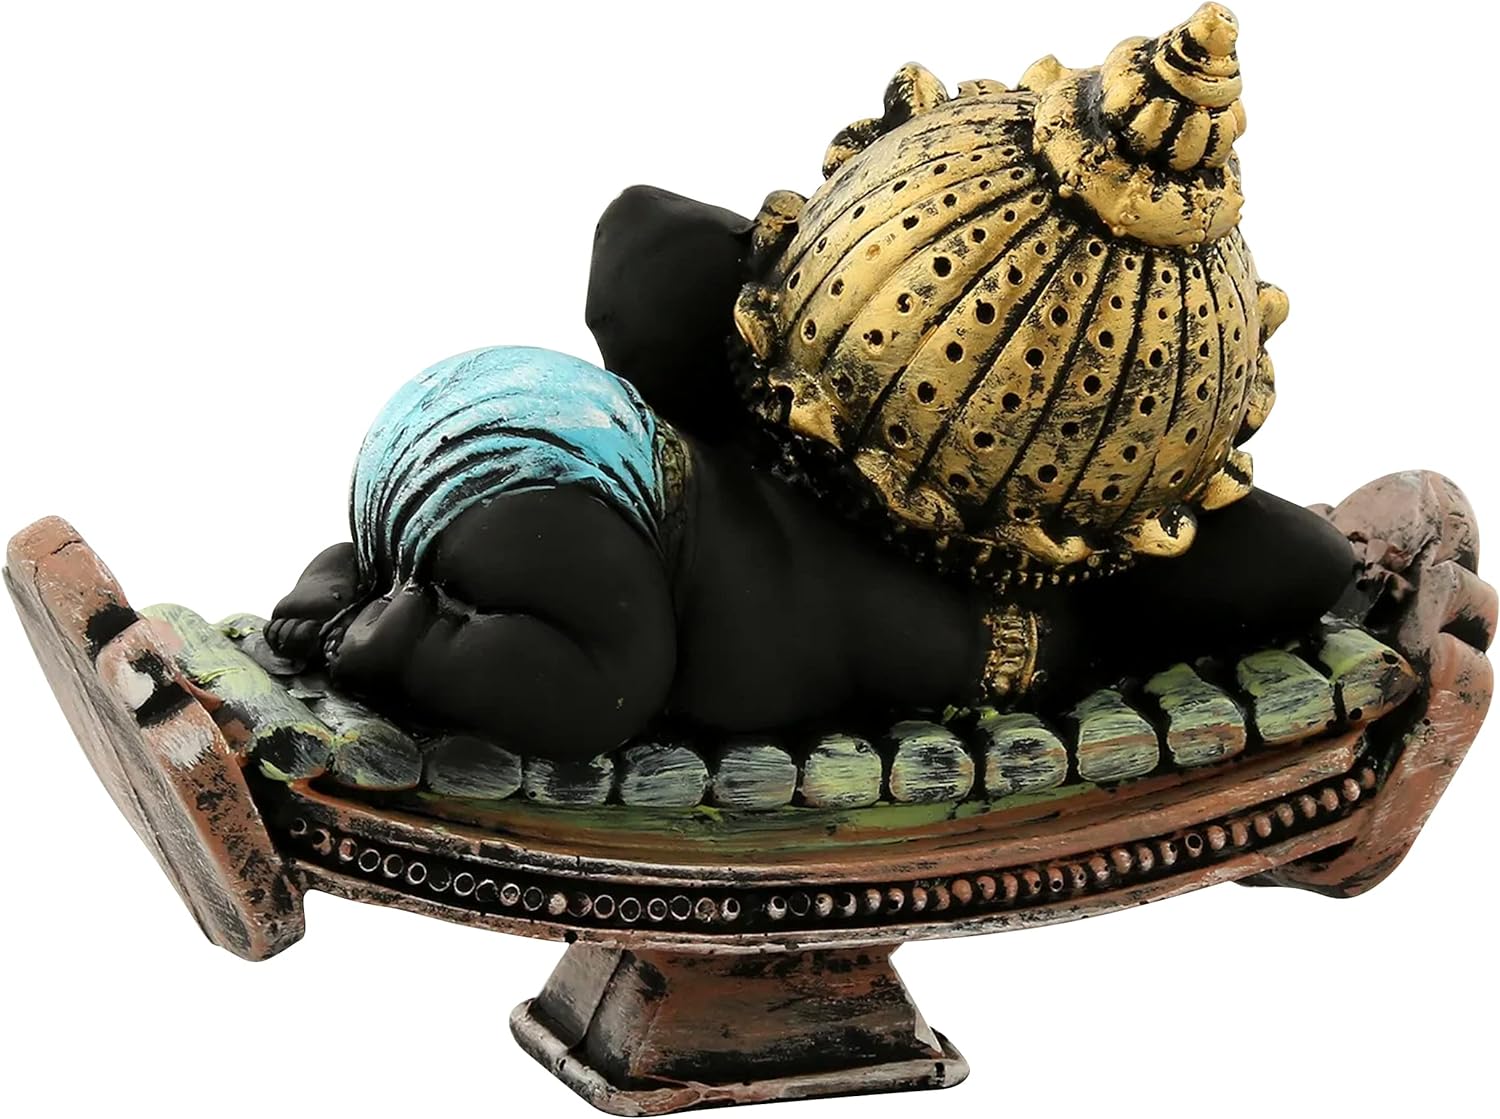 TIED RIBBONS Lord Ganesha Statue | Resin, 4.3 x 6.2 inch | Hindu Elephant God Statue | Buddha Figurine Lying Ganesha Idol for Car Dashboard, Pooja, Home, Table, Desktop | Diwali Decorations for Home